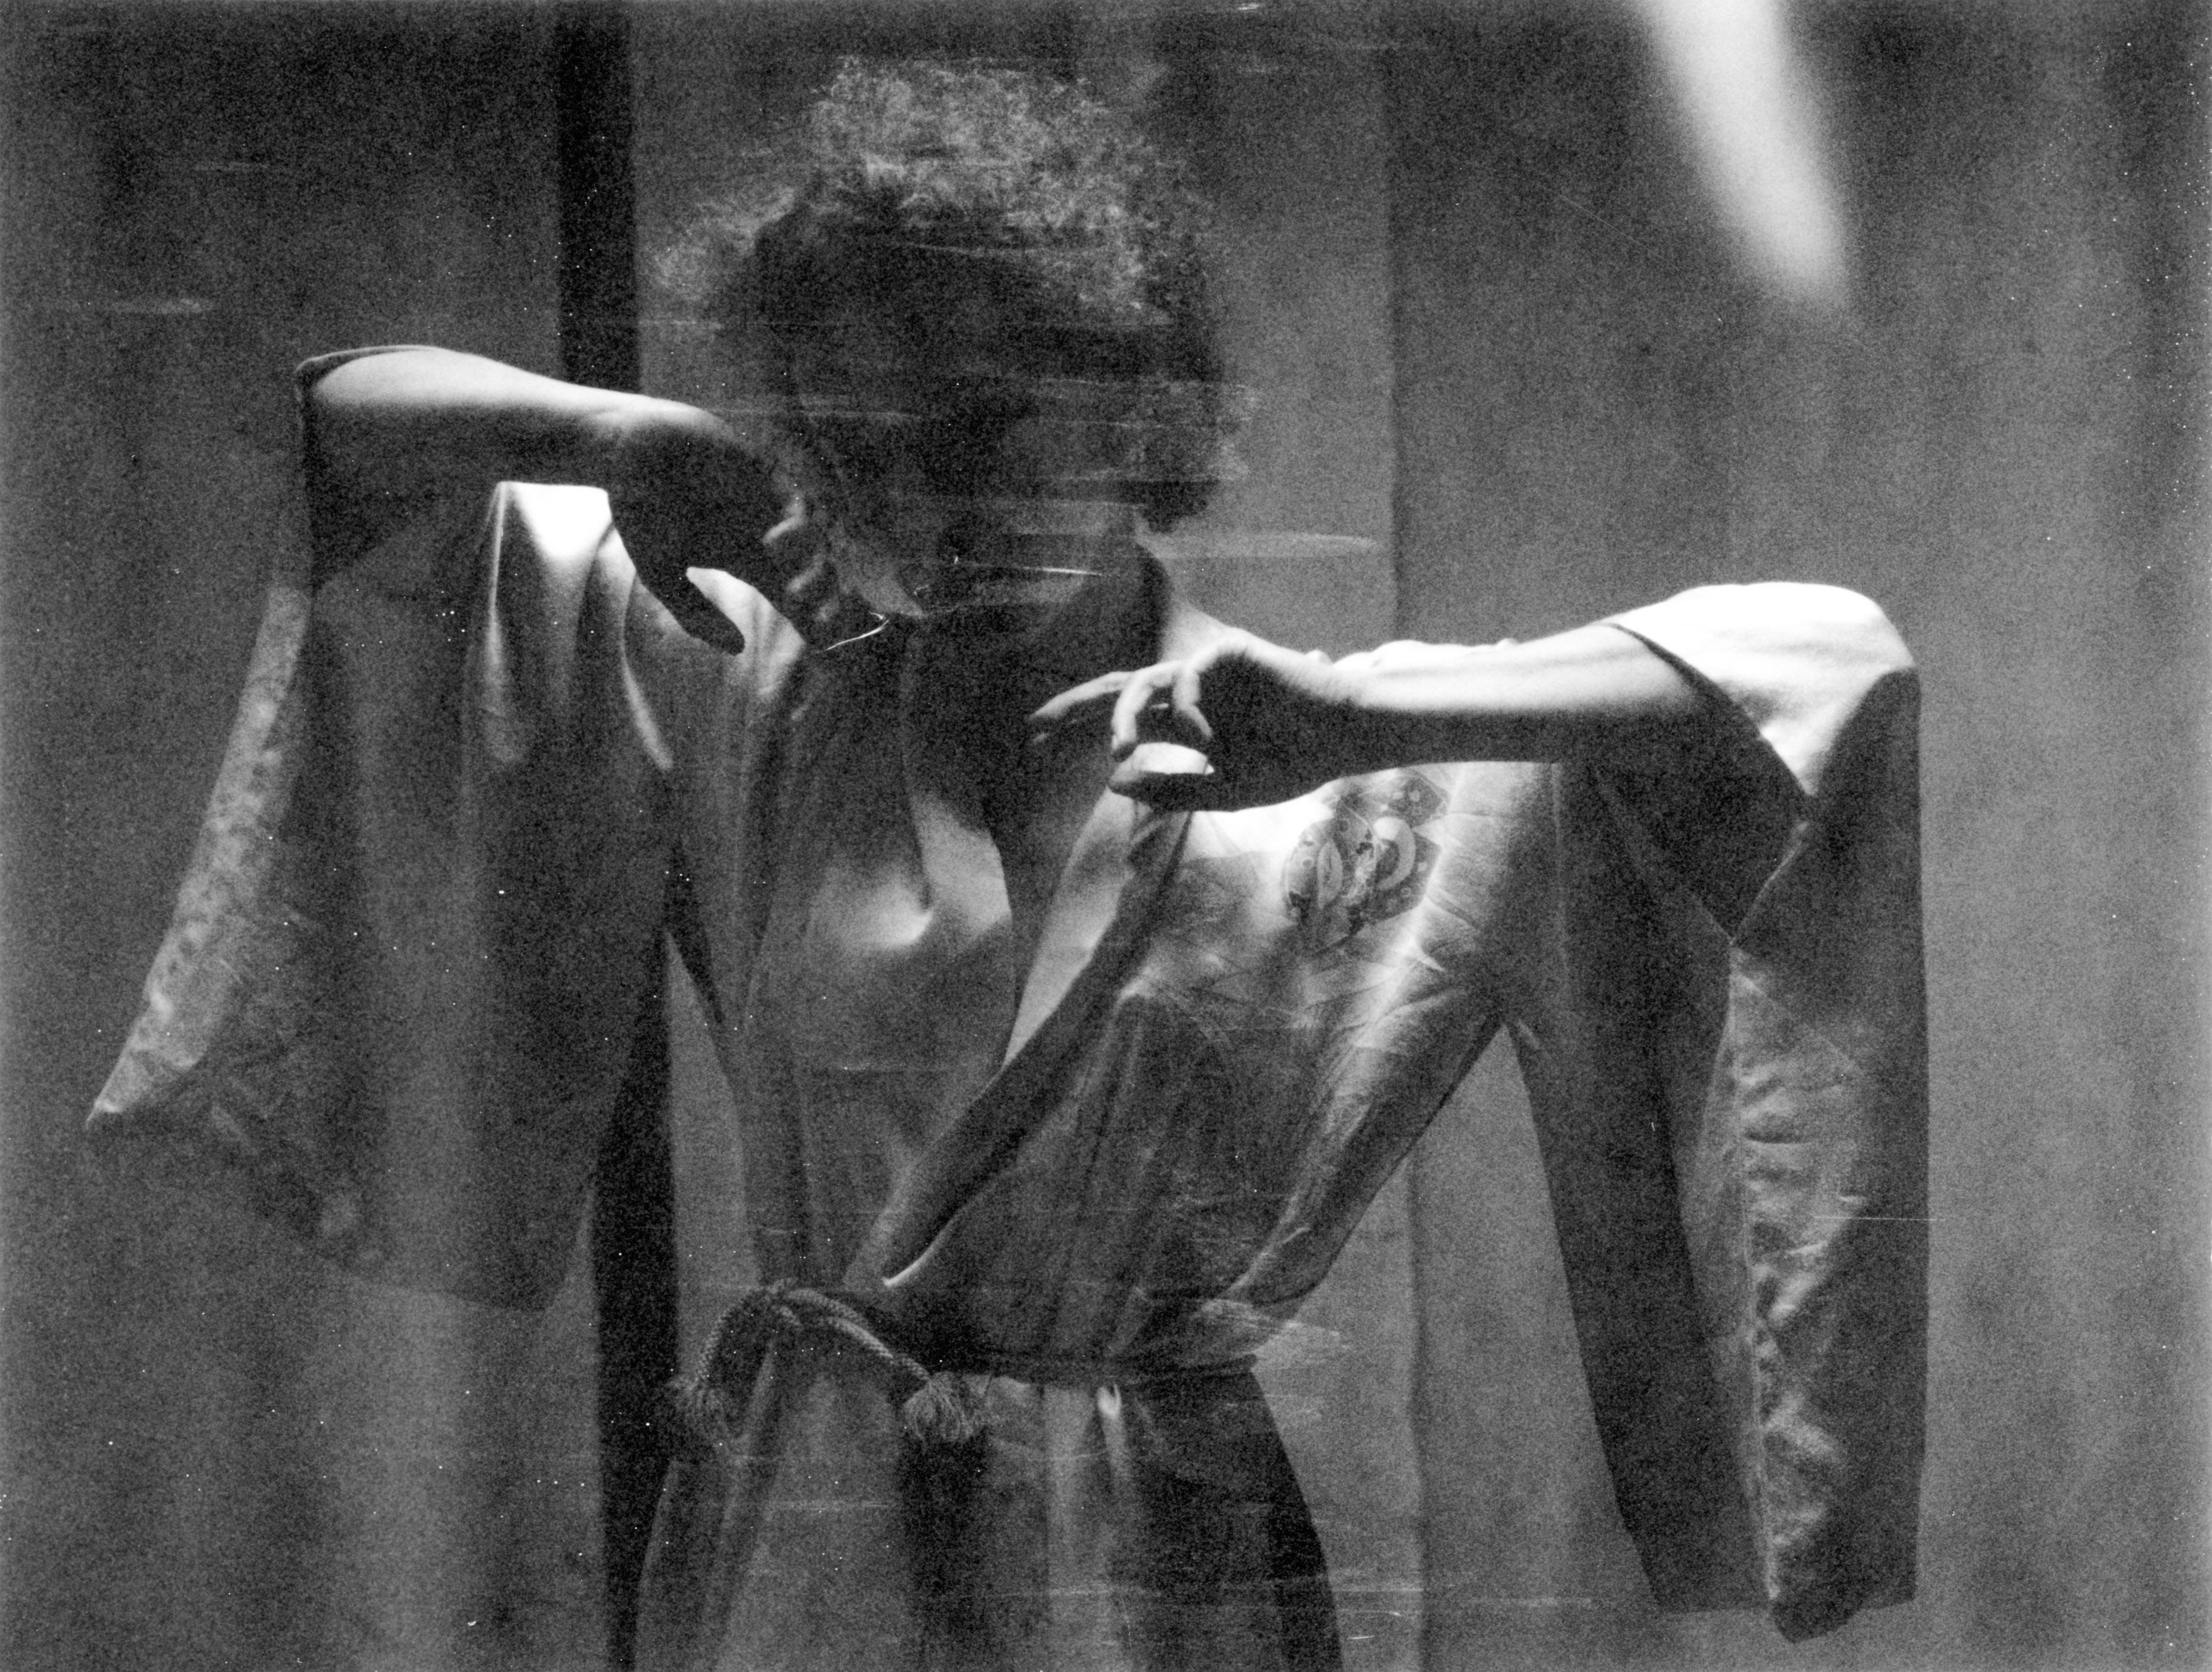 Ritual - Contemporary, Polaroid, Black and White, Women, 21st Century, Nude